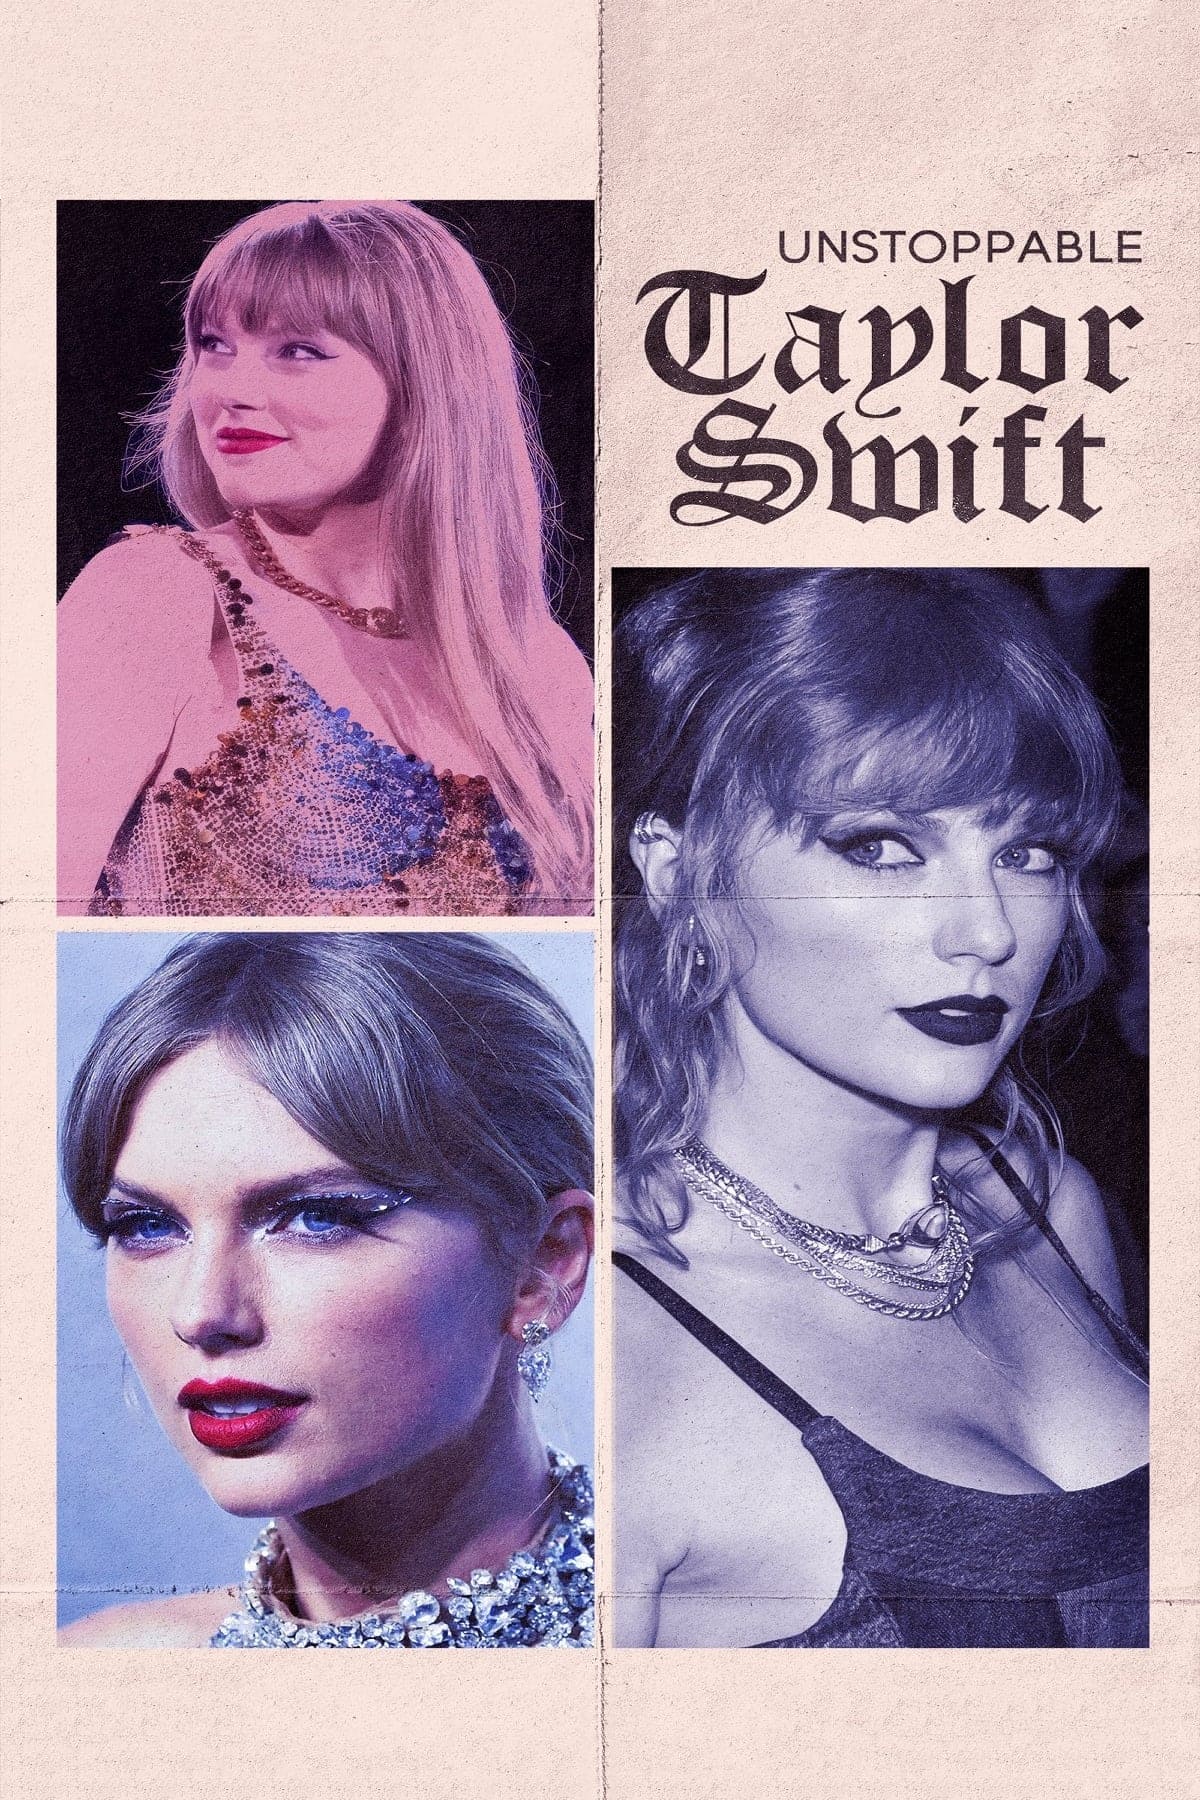 Taylor Swift: Latest News, News Articles, Photos, Videos - NewsBytes